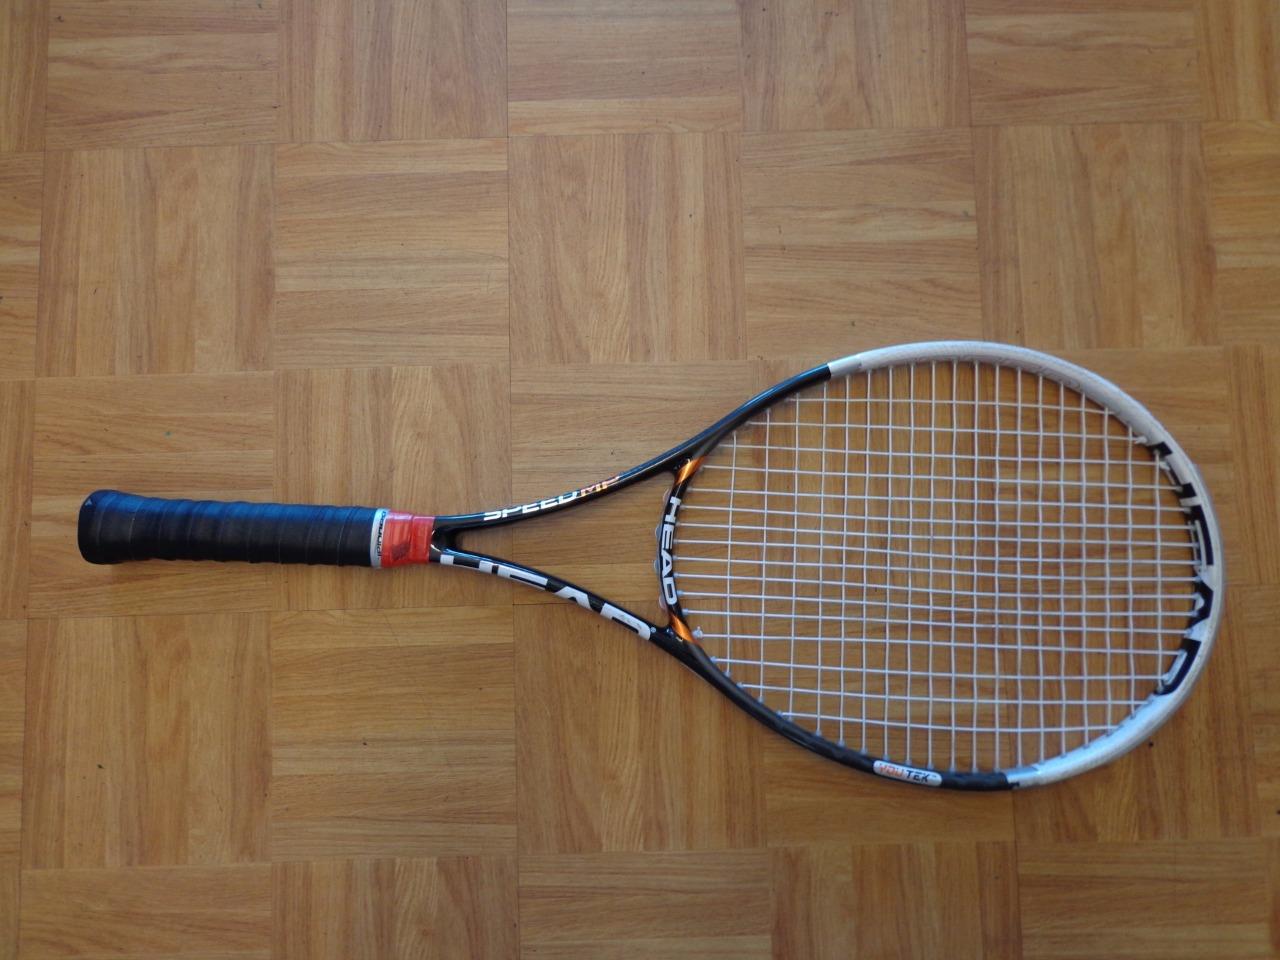 Head Youtek IG Speed MP 315 16x19 100 head 4 3/8 grip Tennis Racquet